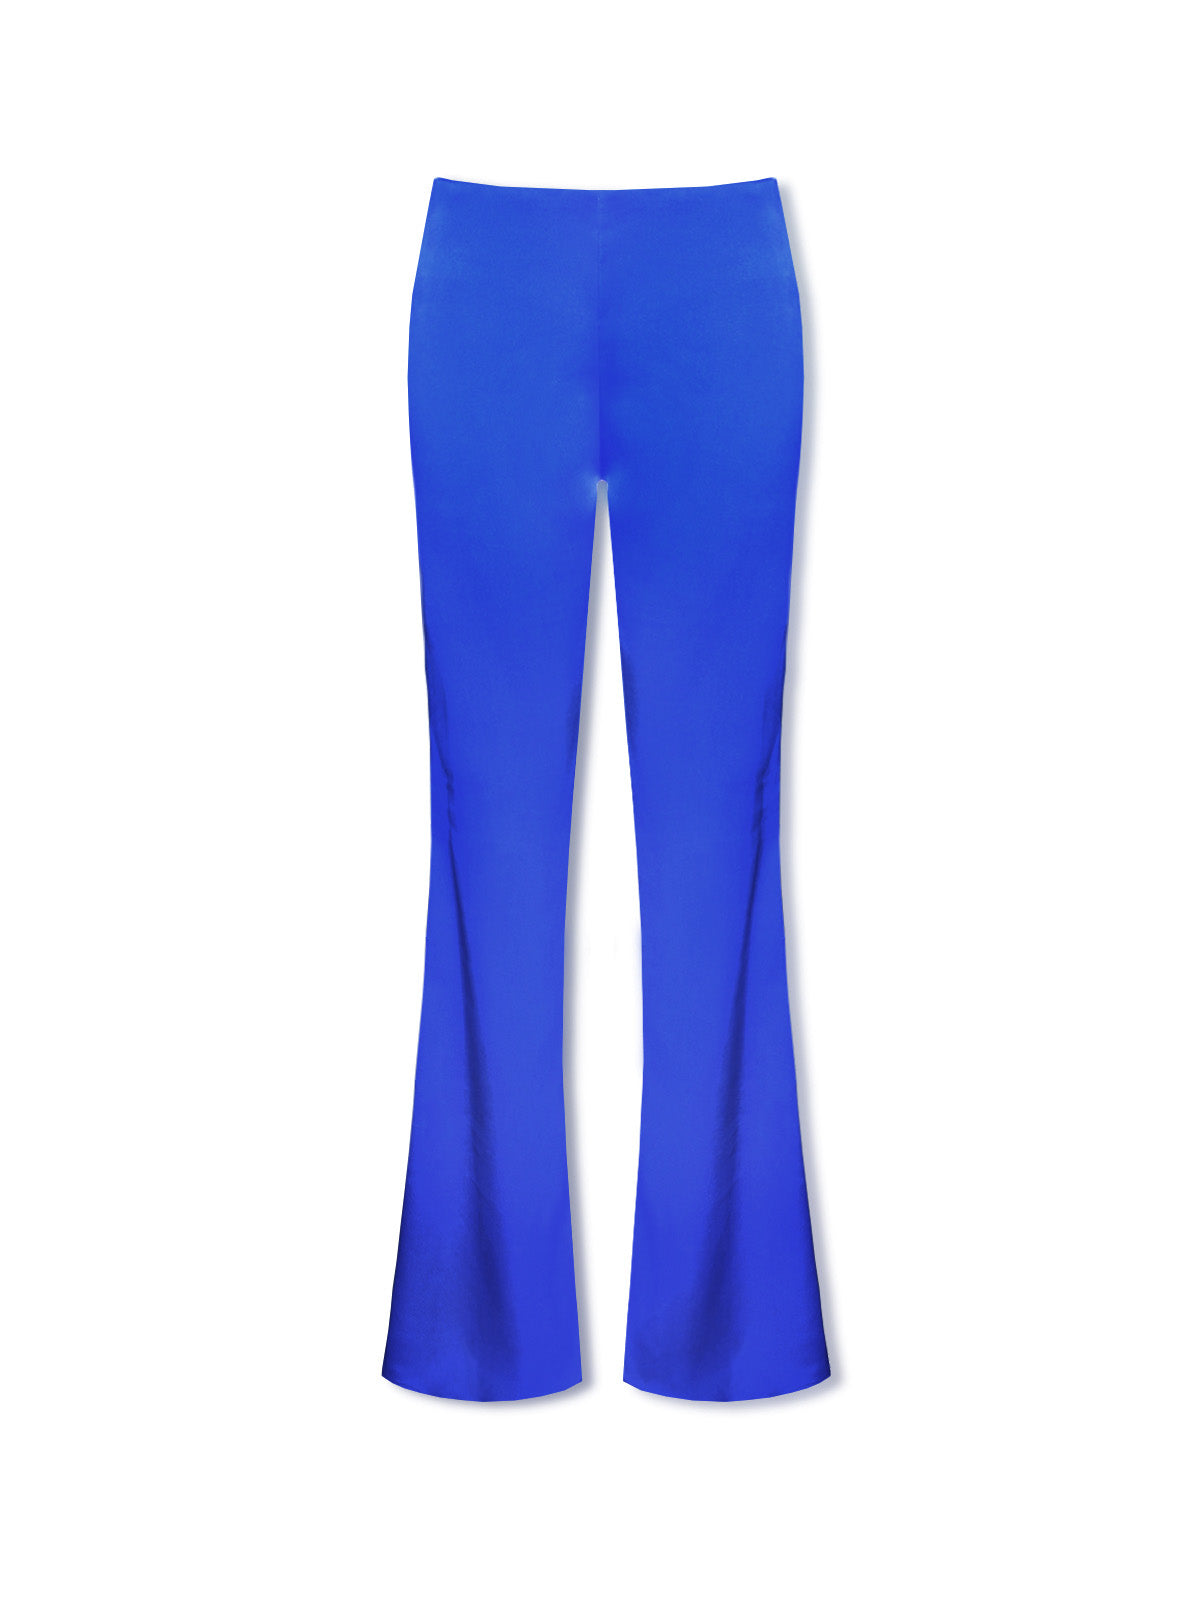 WYN trousers - cobalt blue